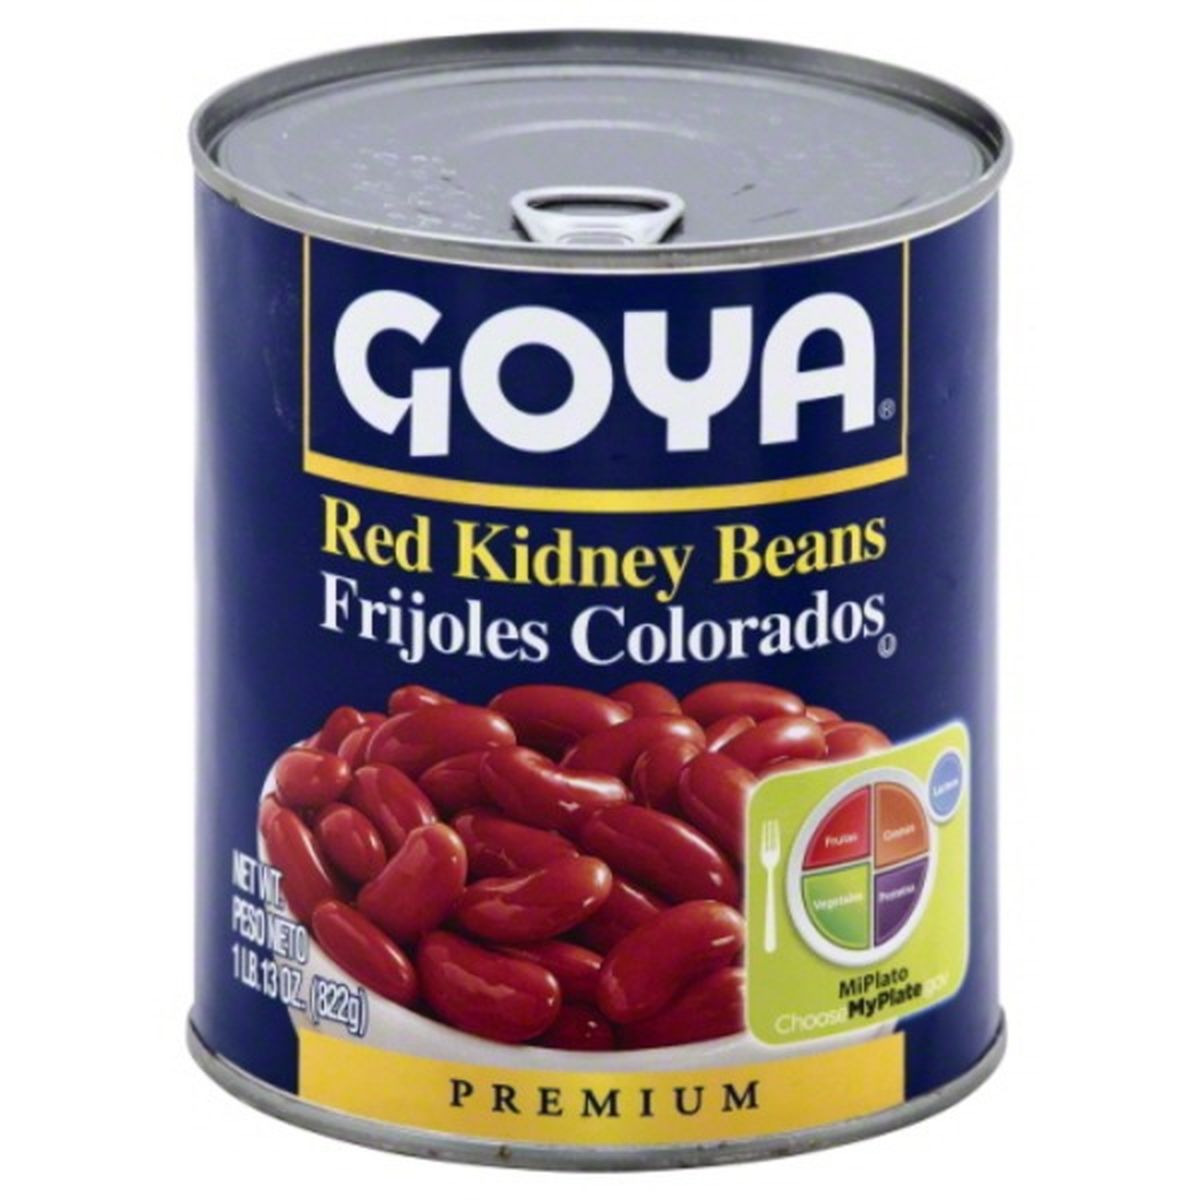 Calories in Goya Kidney Beans, Red, Premium